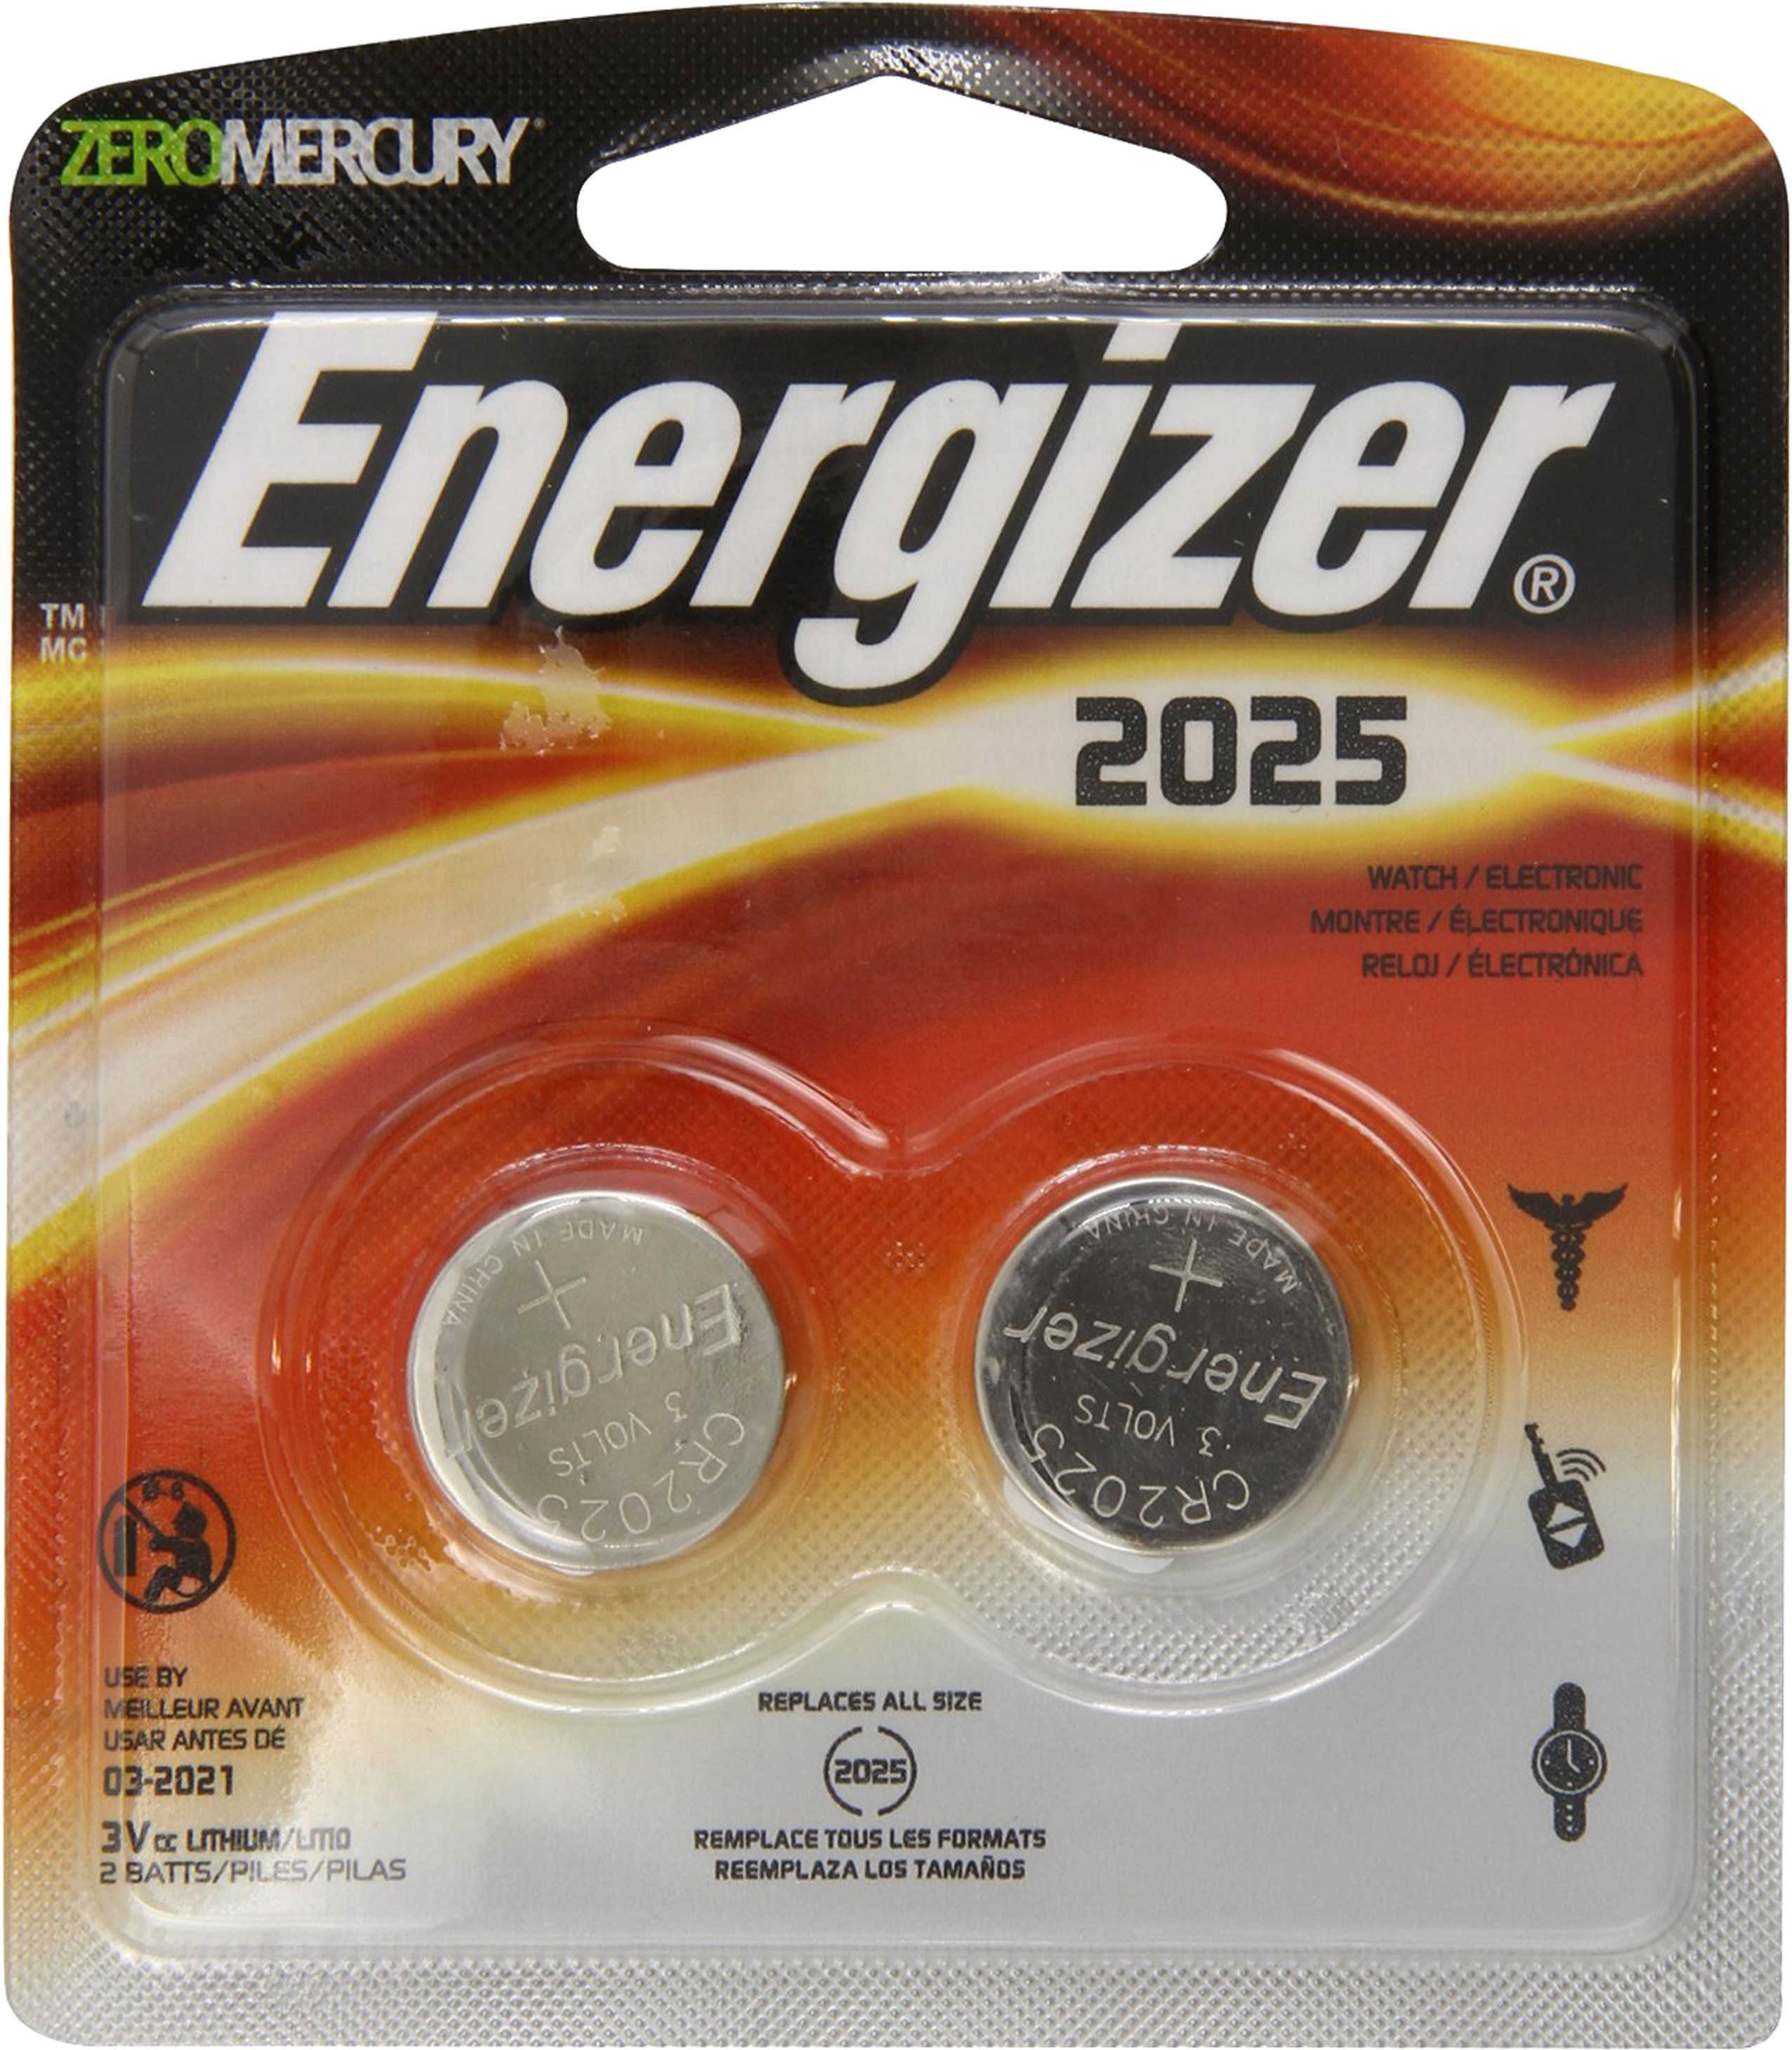 Energizer Lithium Coin #2025 3Volt (2-pack) 2025BP-2